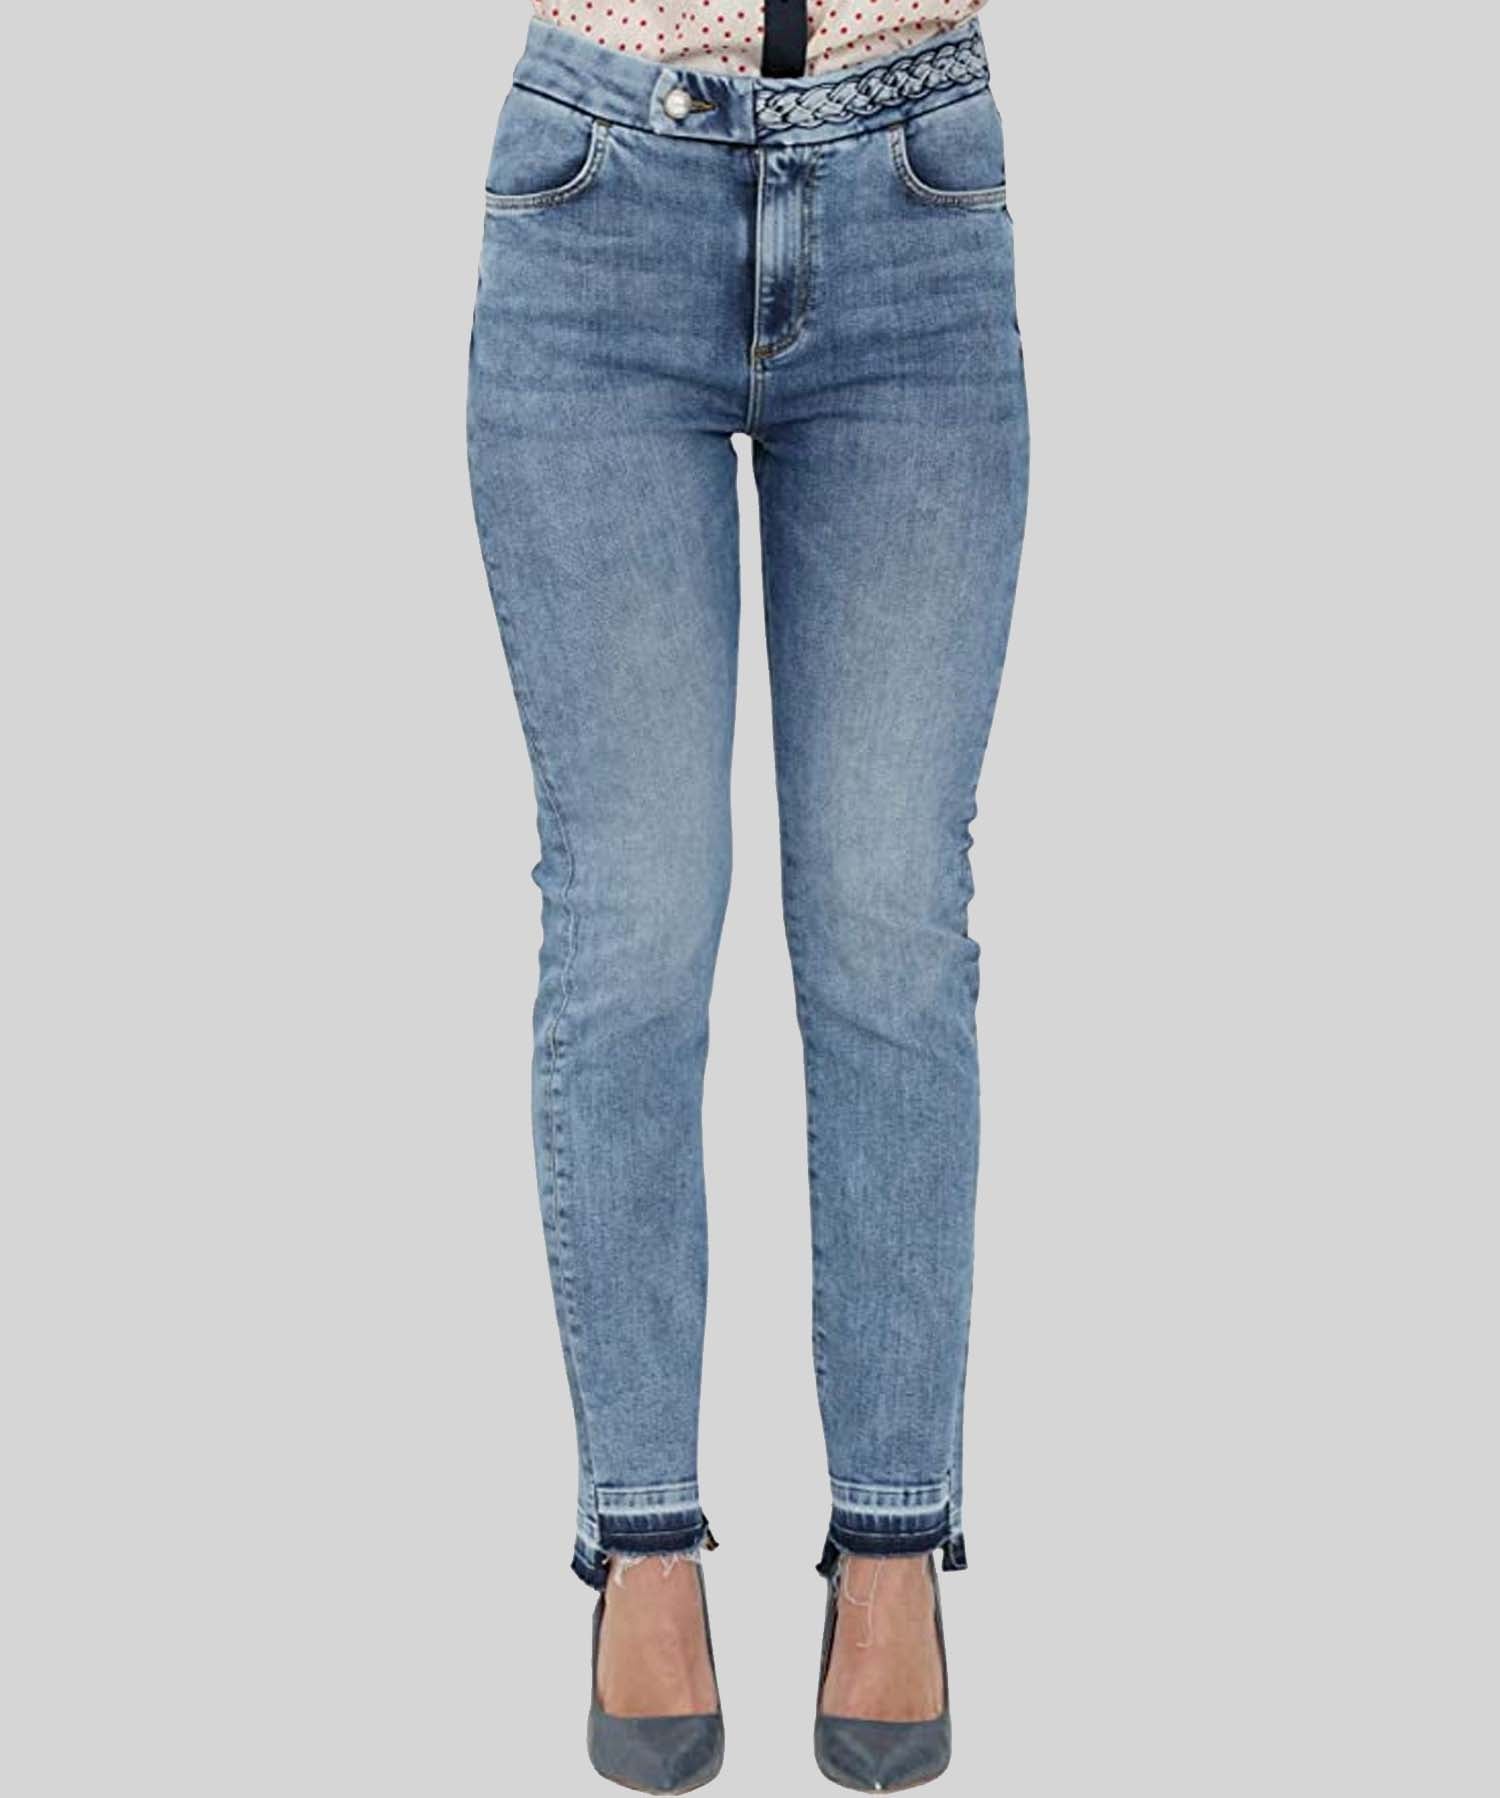 Jeans Denim Blue / Jeans - Ideal Moda